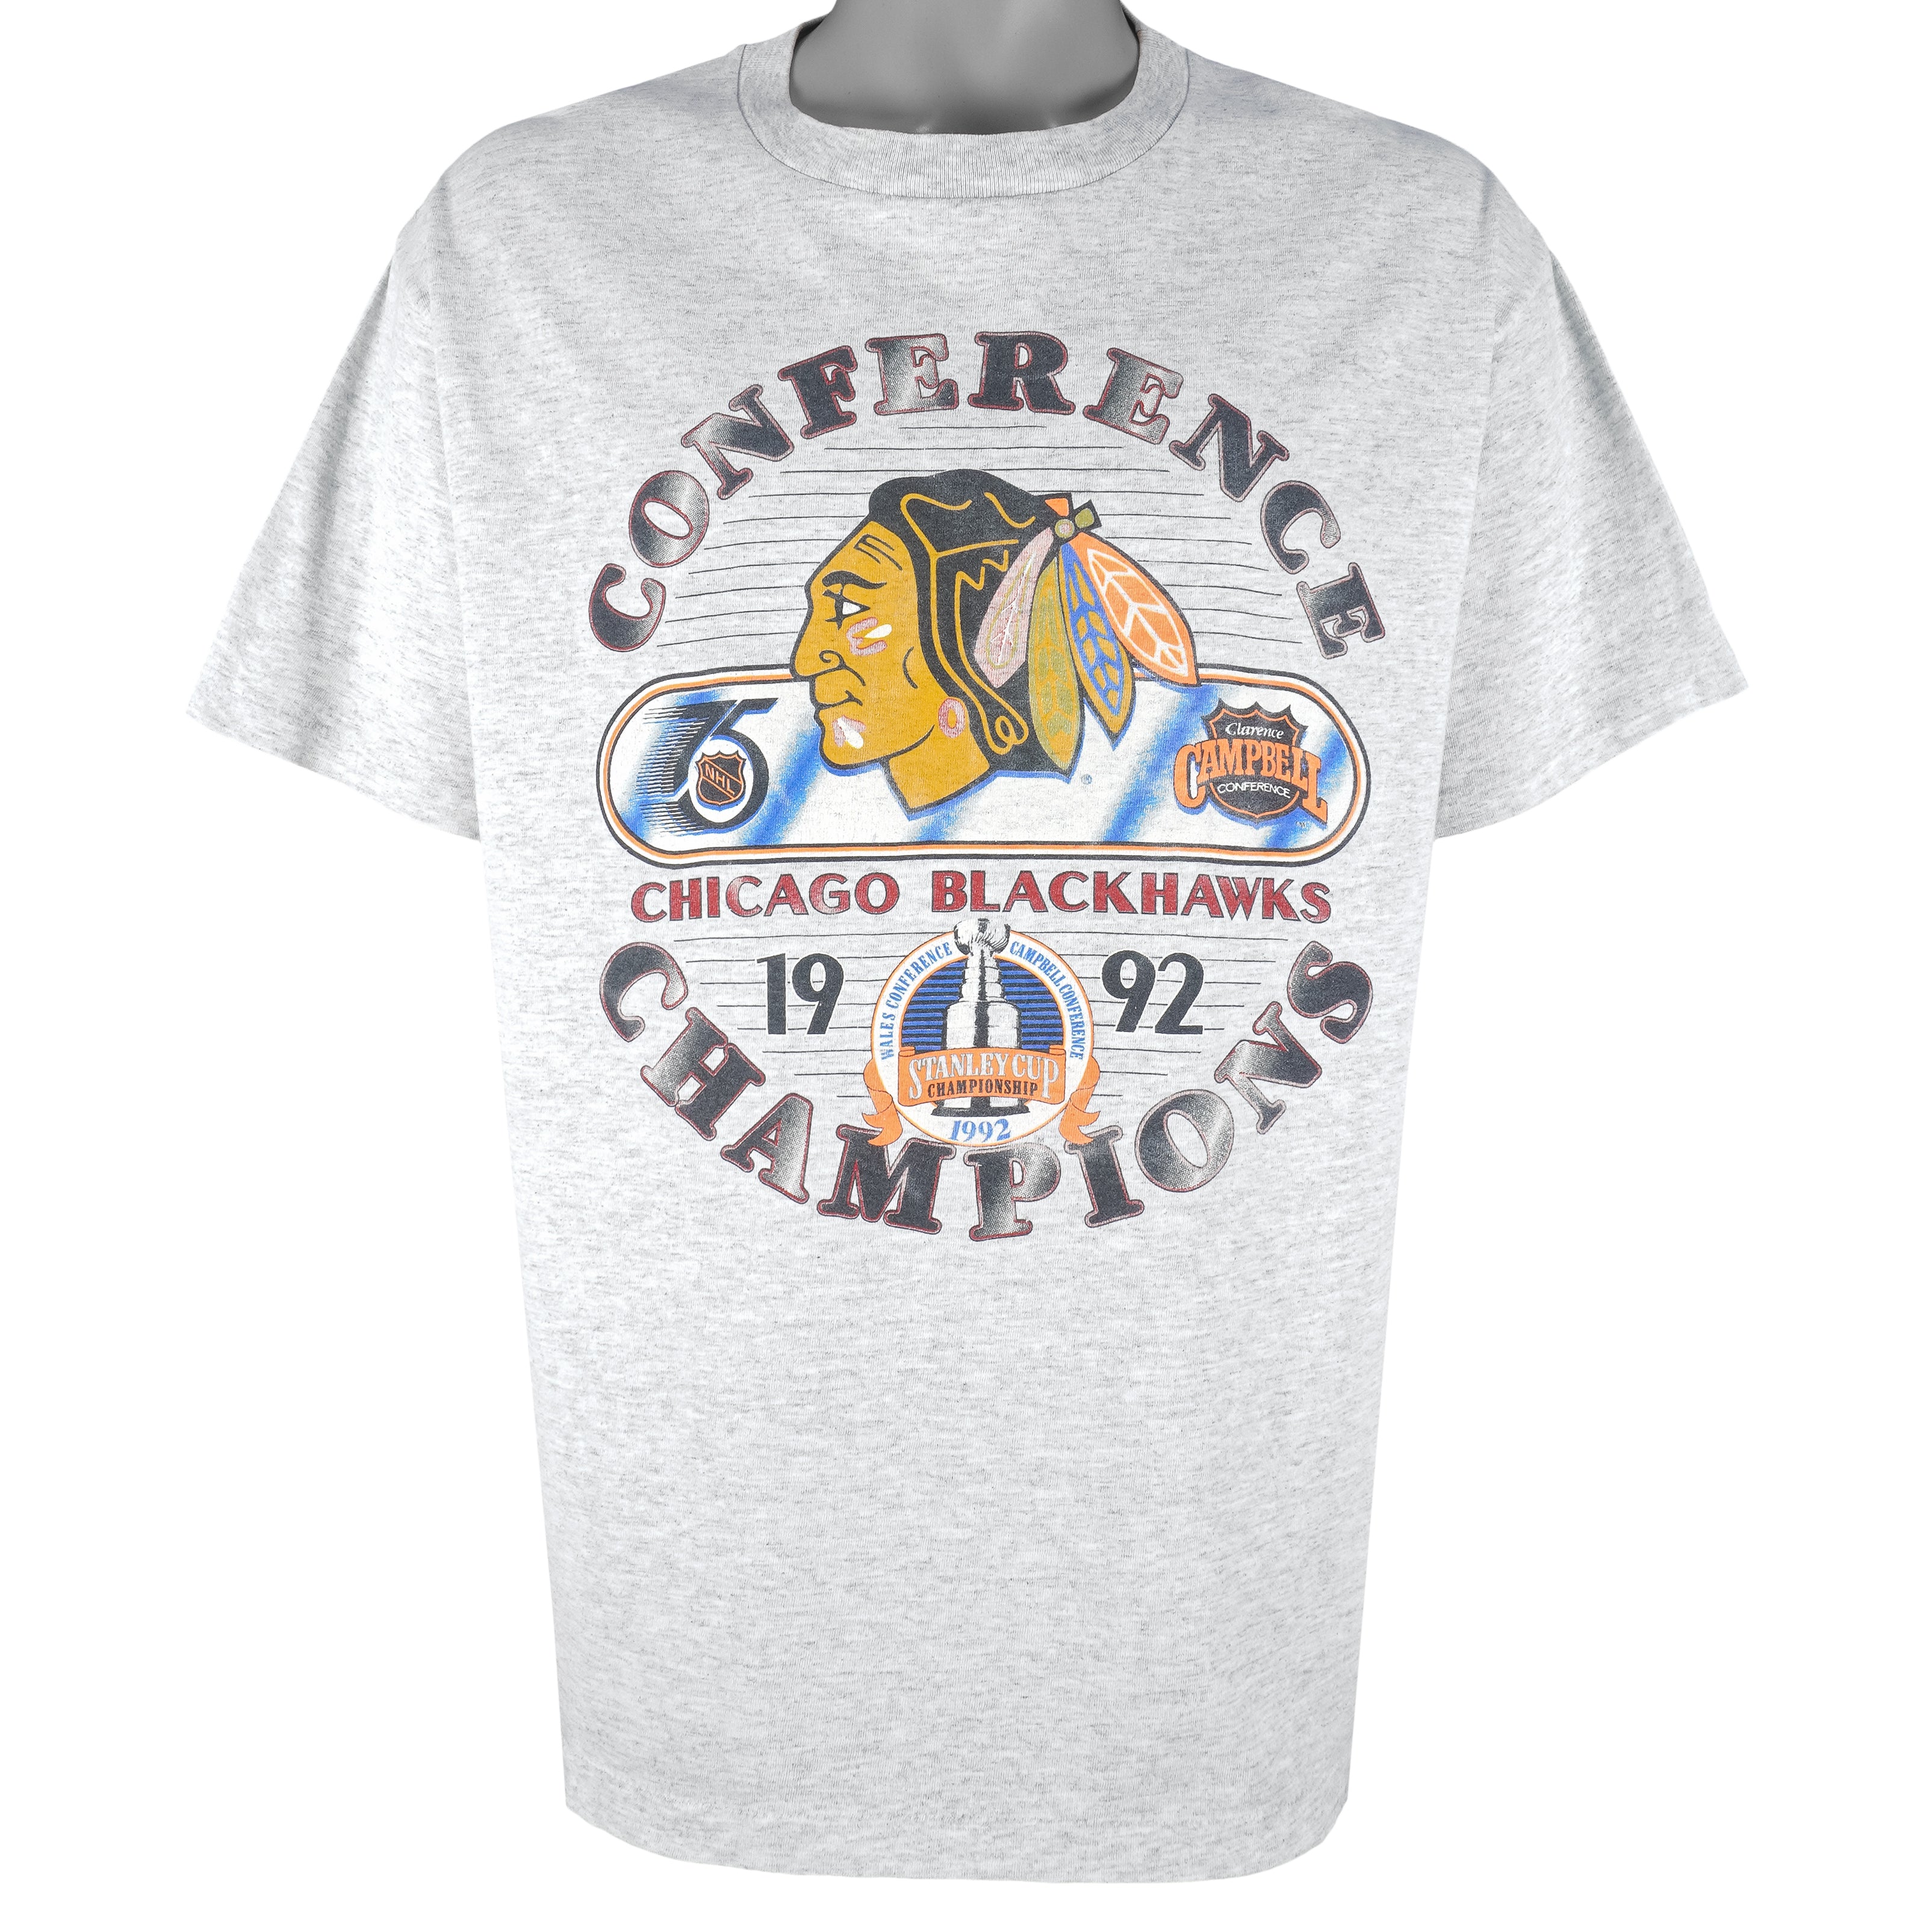 L) Vintage Chicago Blackhawks Shirt